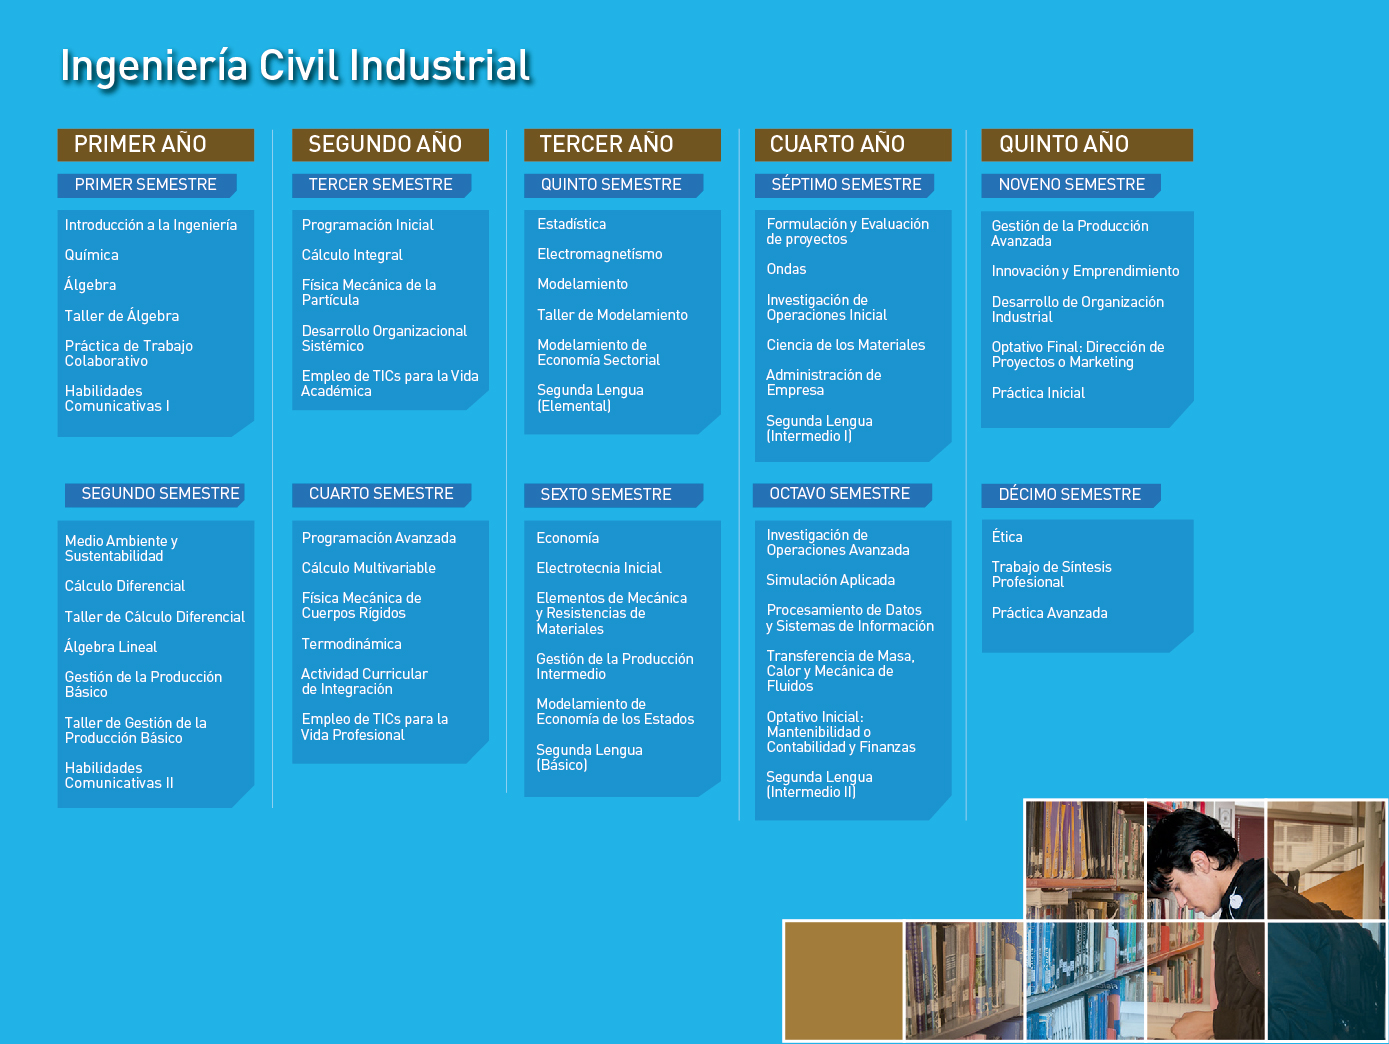 Ingeniería Civil Industrial UPLA: Malla